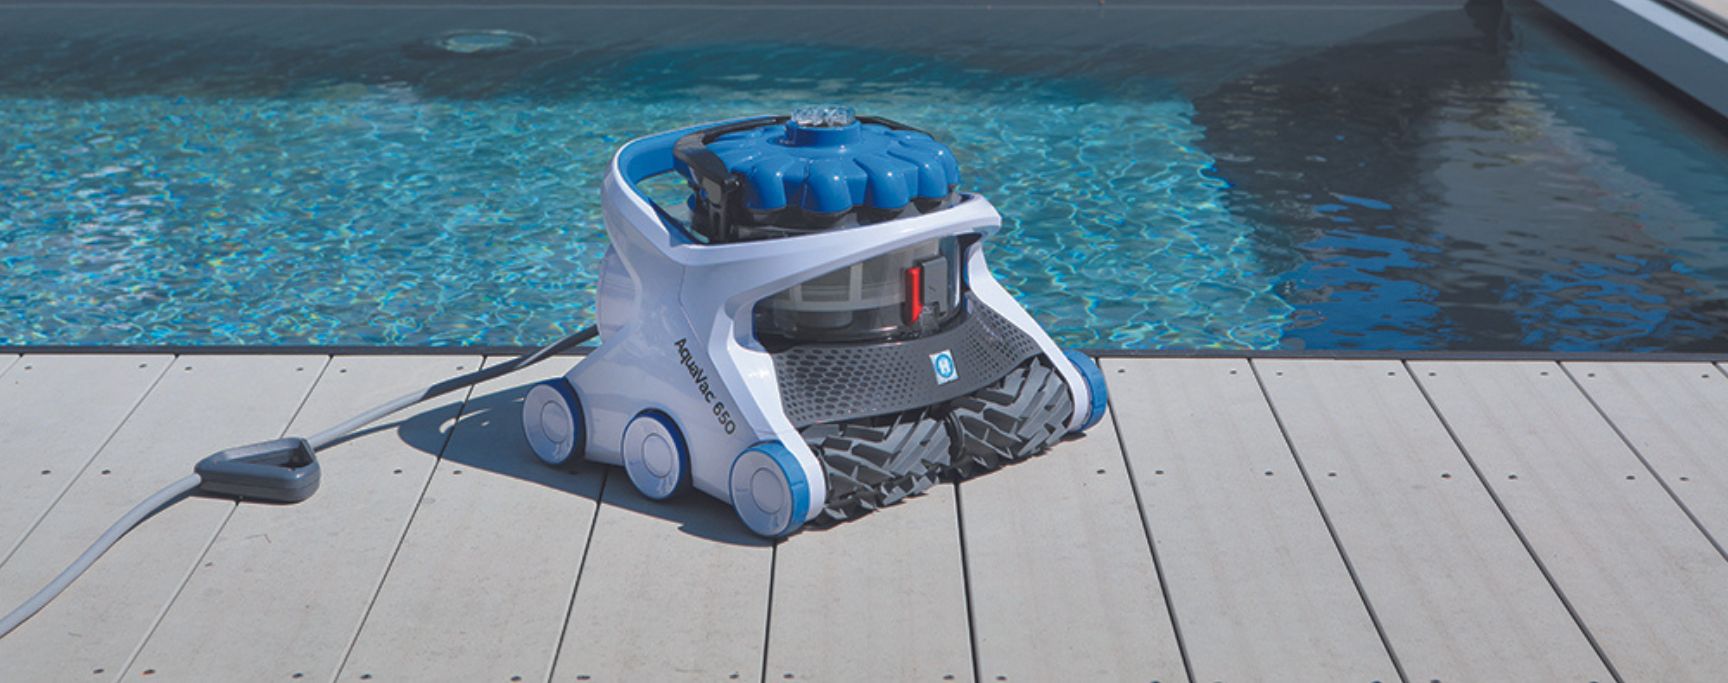 robot piscine frequence utilisation